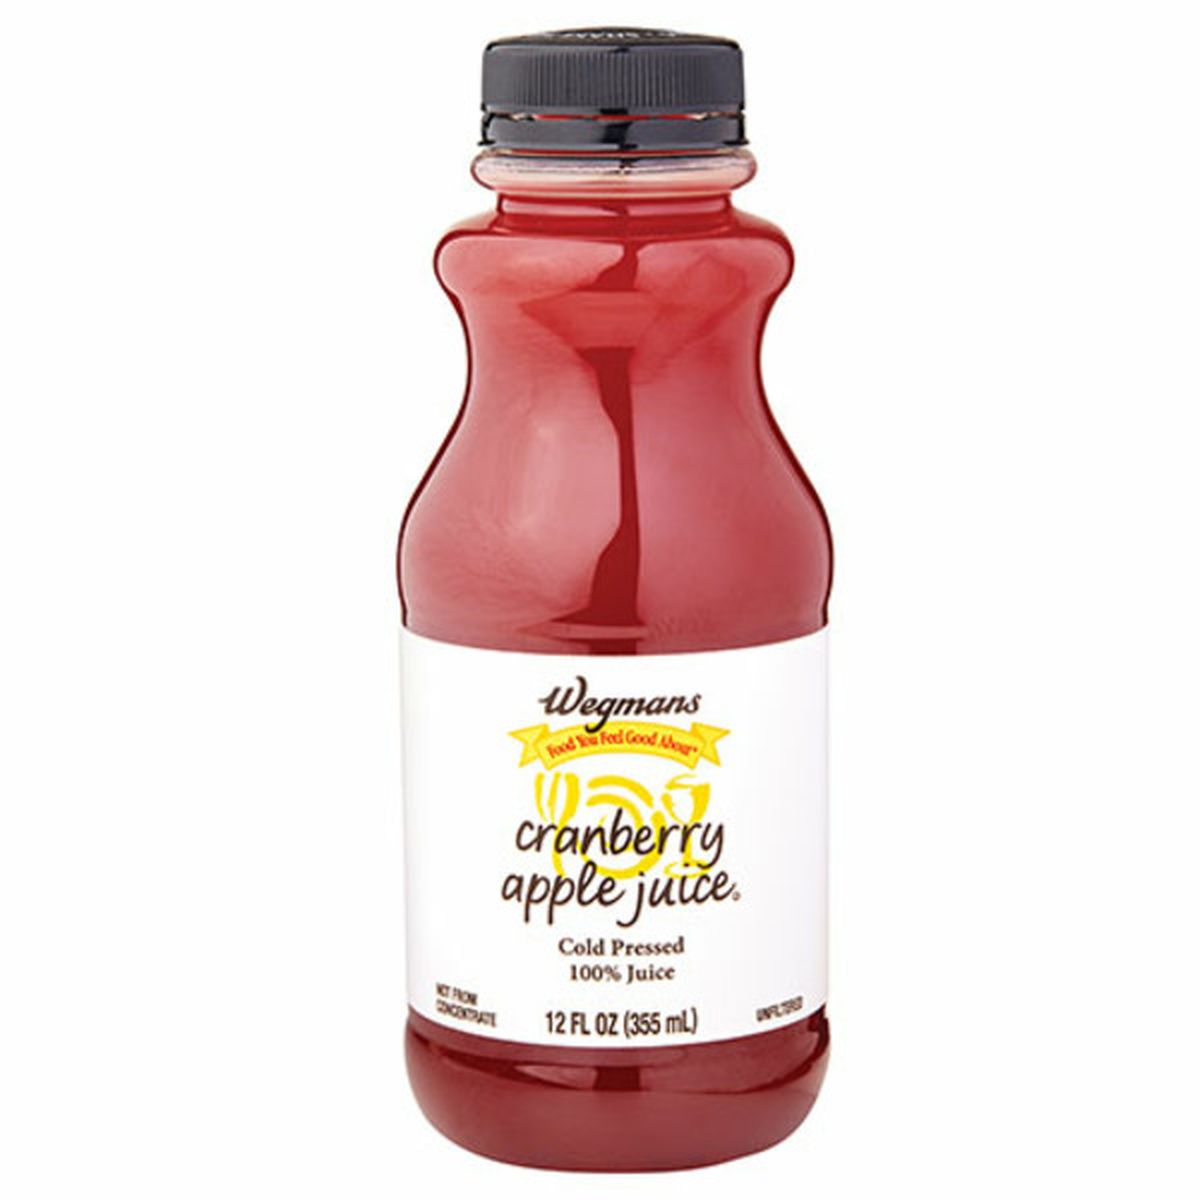 Calories in Wegmans Cold Pressed 100% Juice, Cranberry Apple